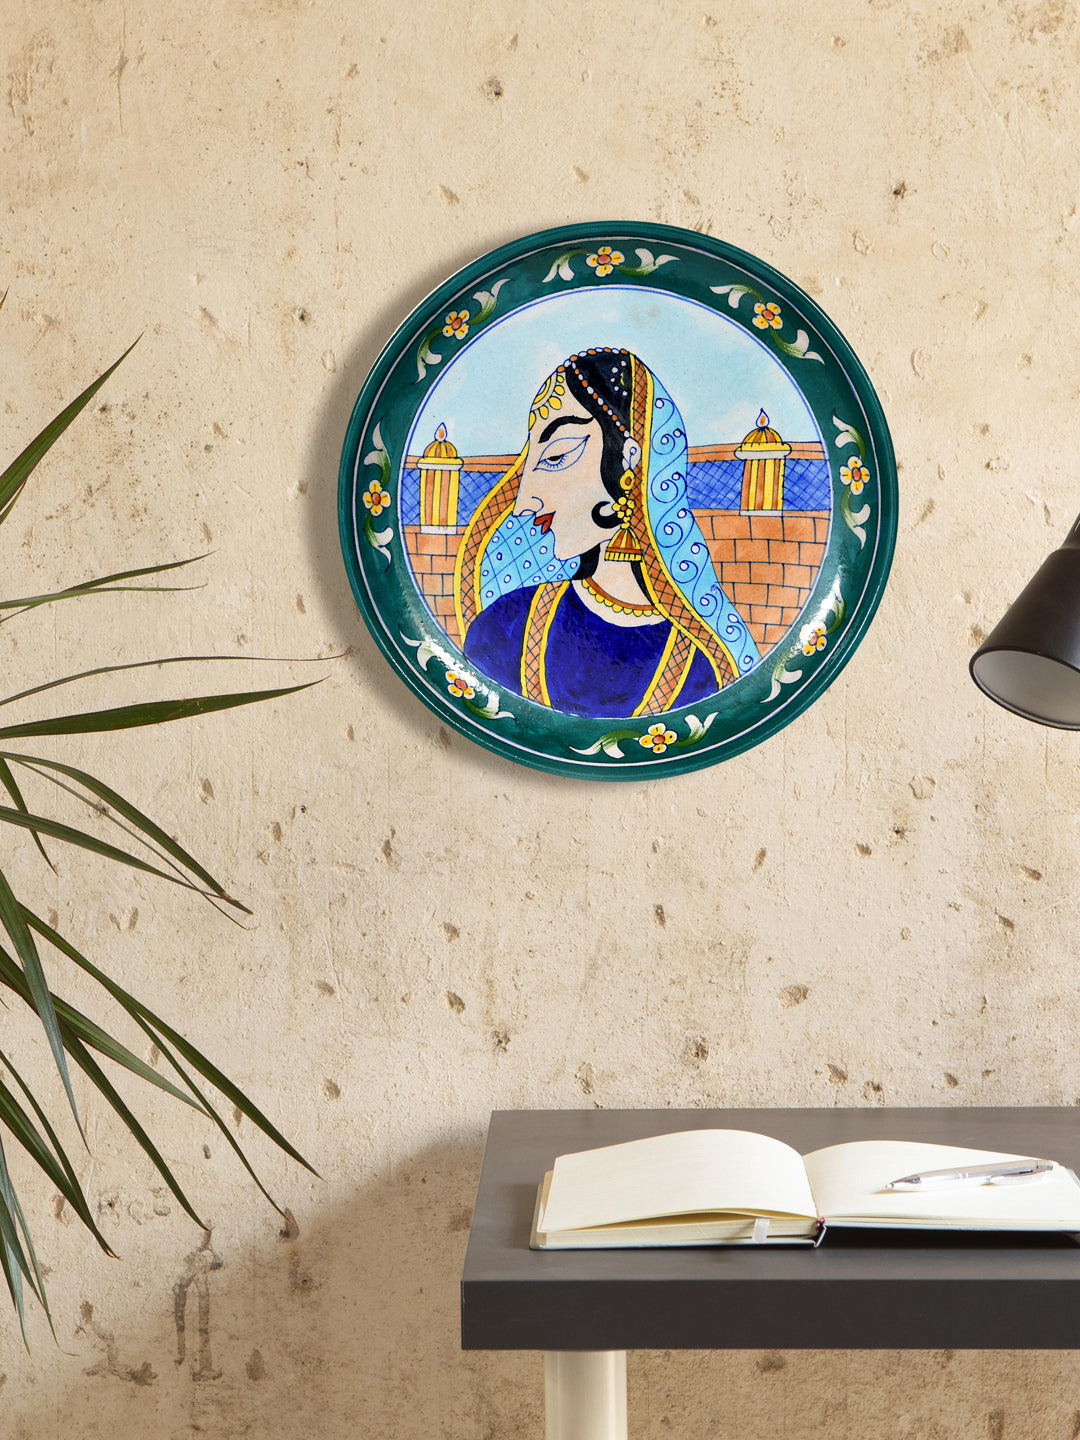 Handmade Jaipur Blue Pottery Plate - 10 inch diameter